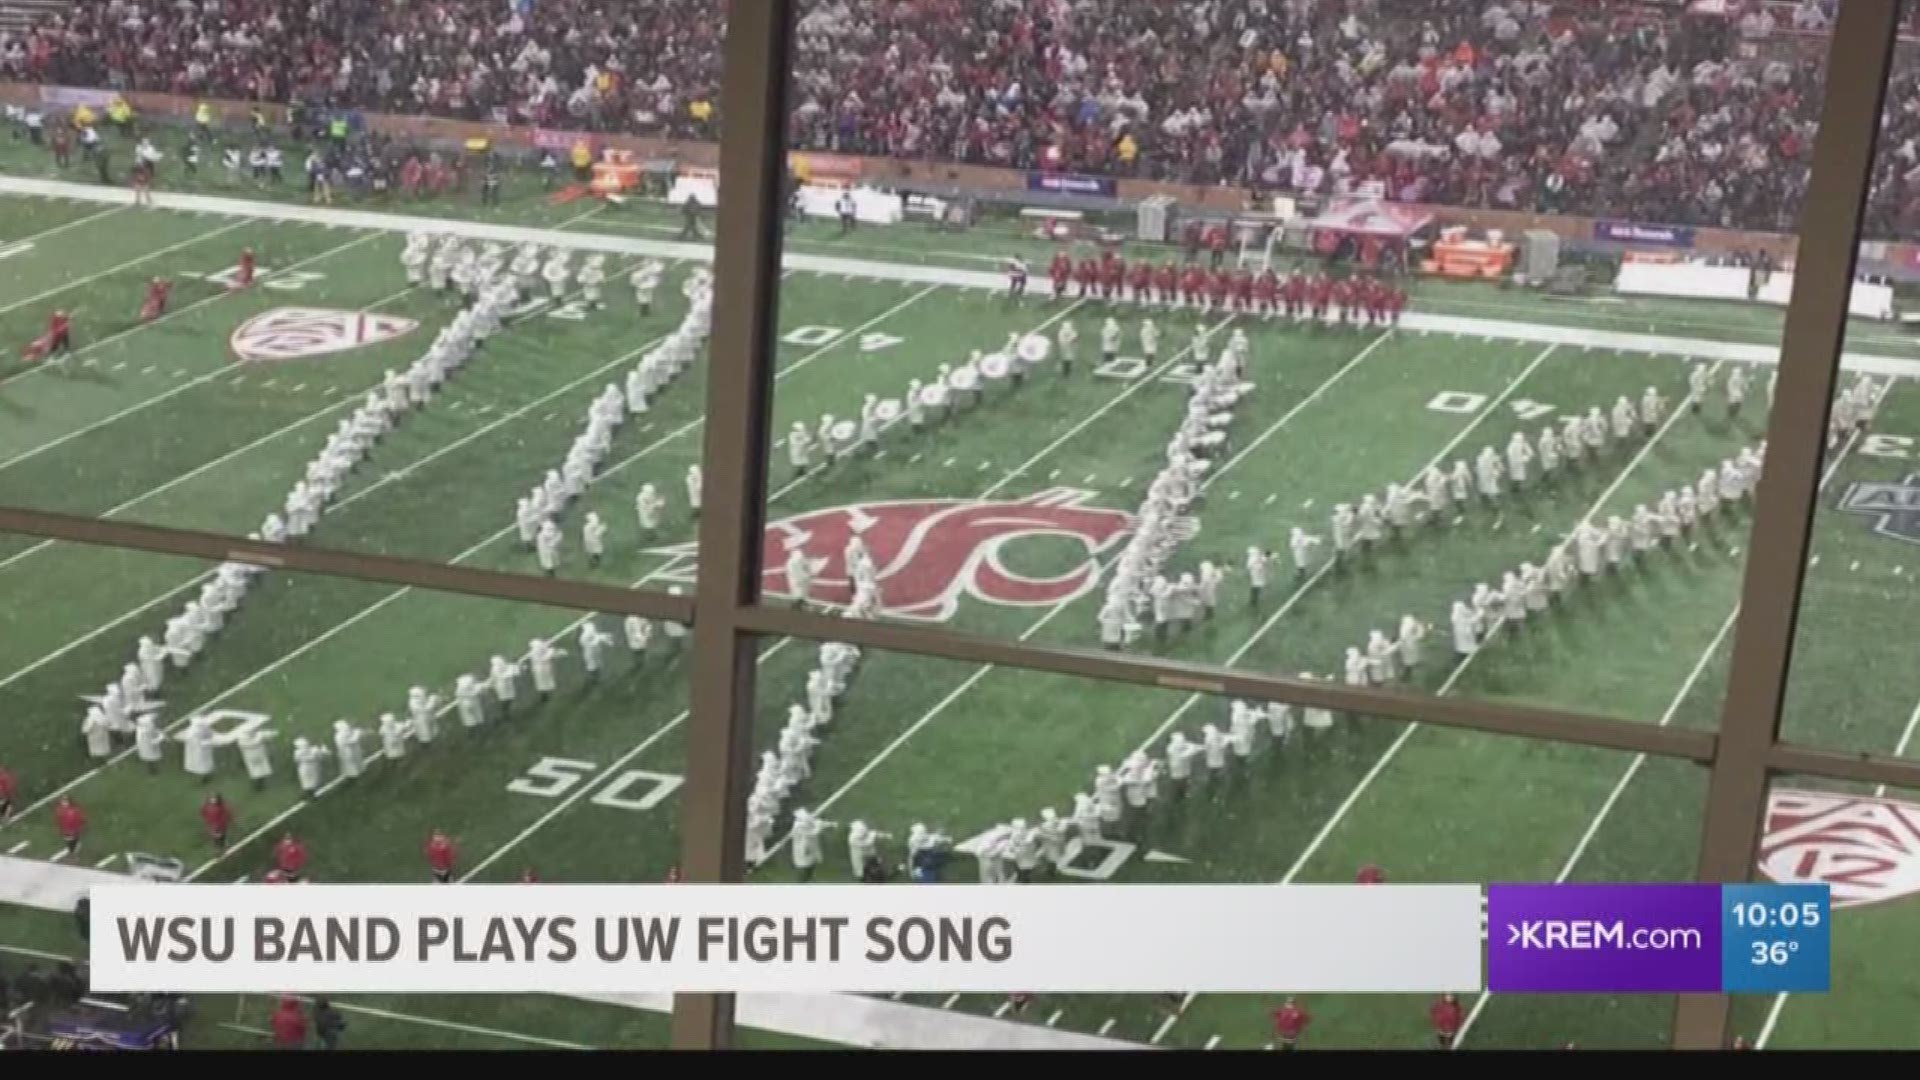 WSU Band plays UW fight song